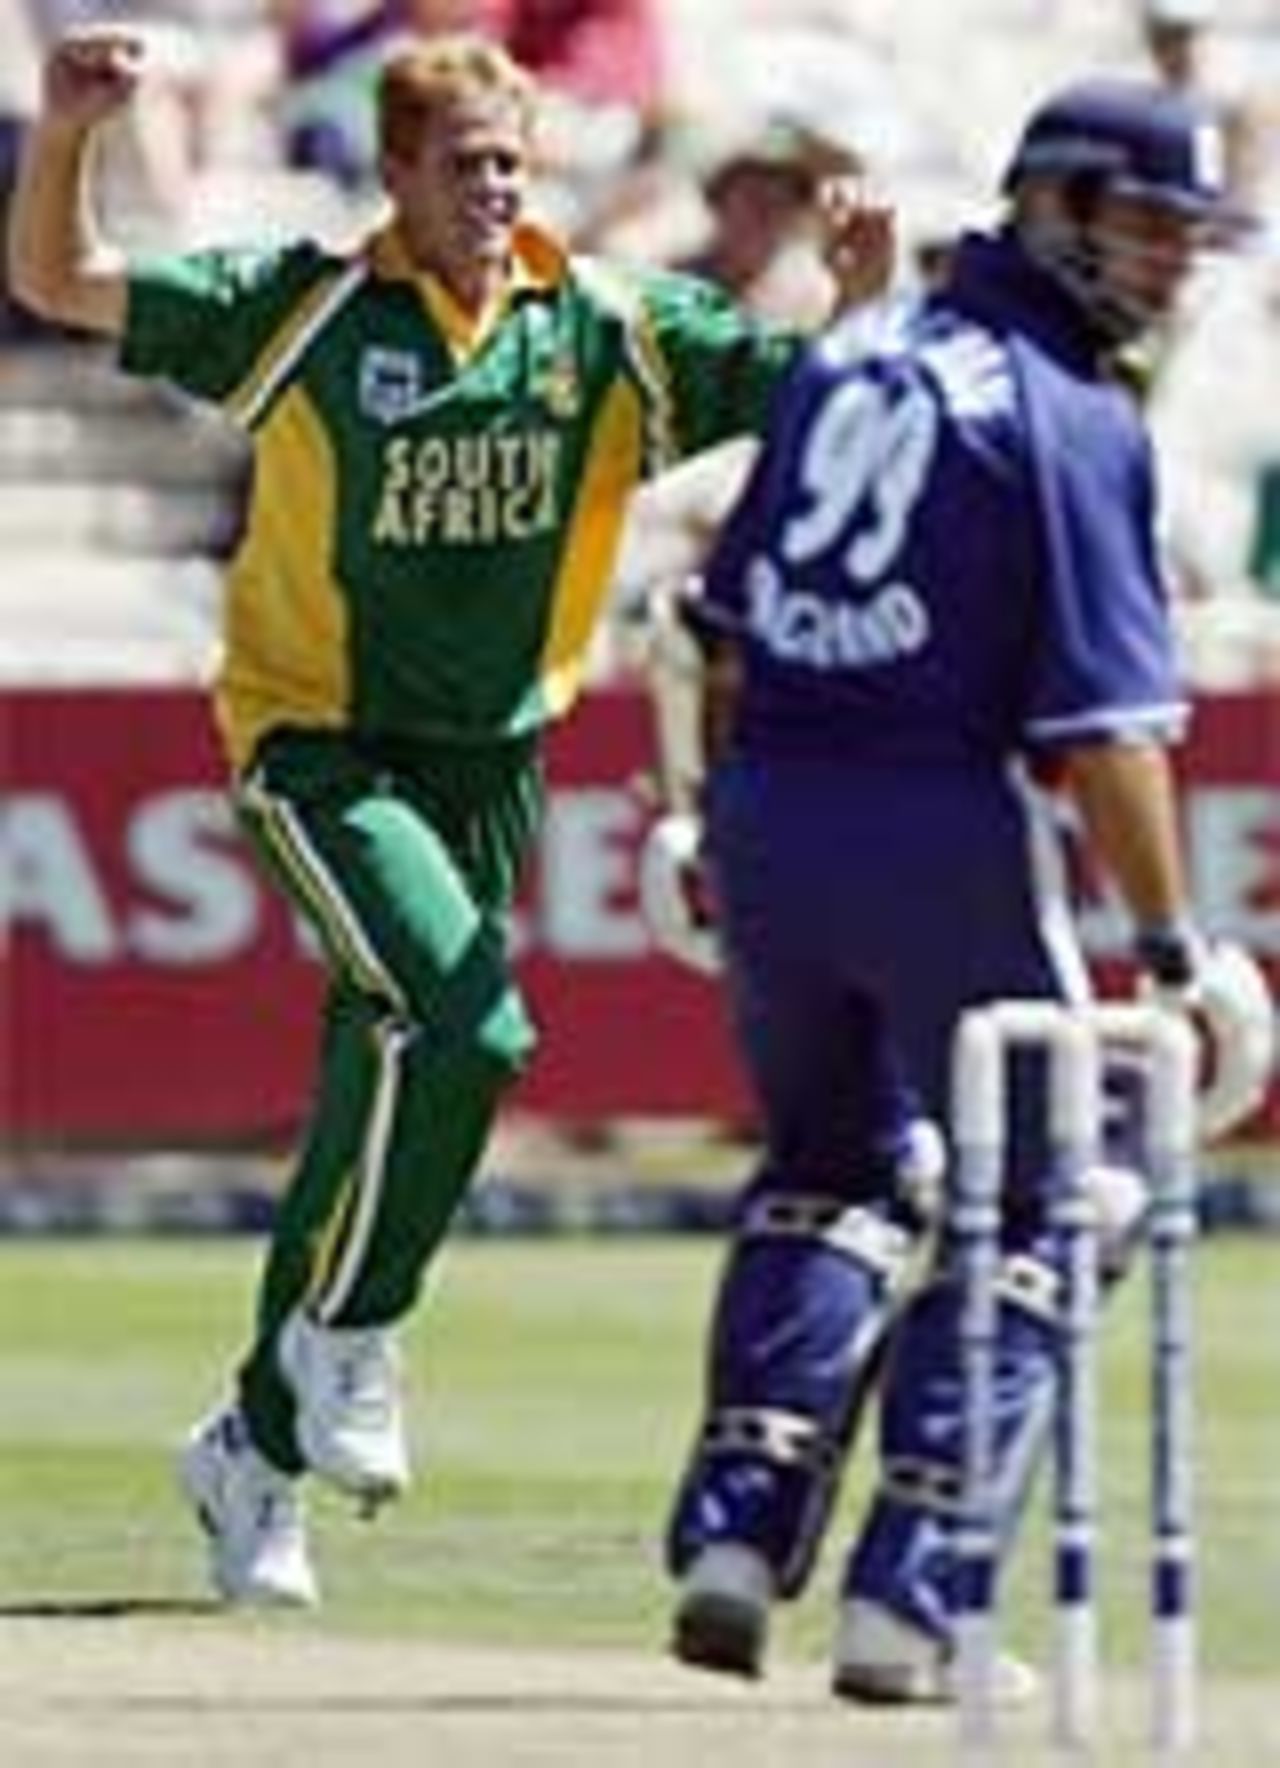 Shaun Pollock celebrates dismissing Michael Vaughan, 4th ODI, South Africa v England, Cape Town, February 6, 2005